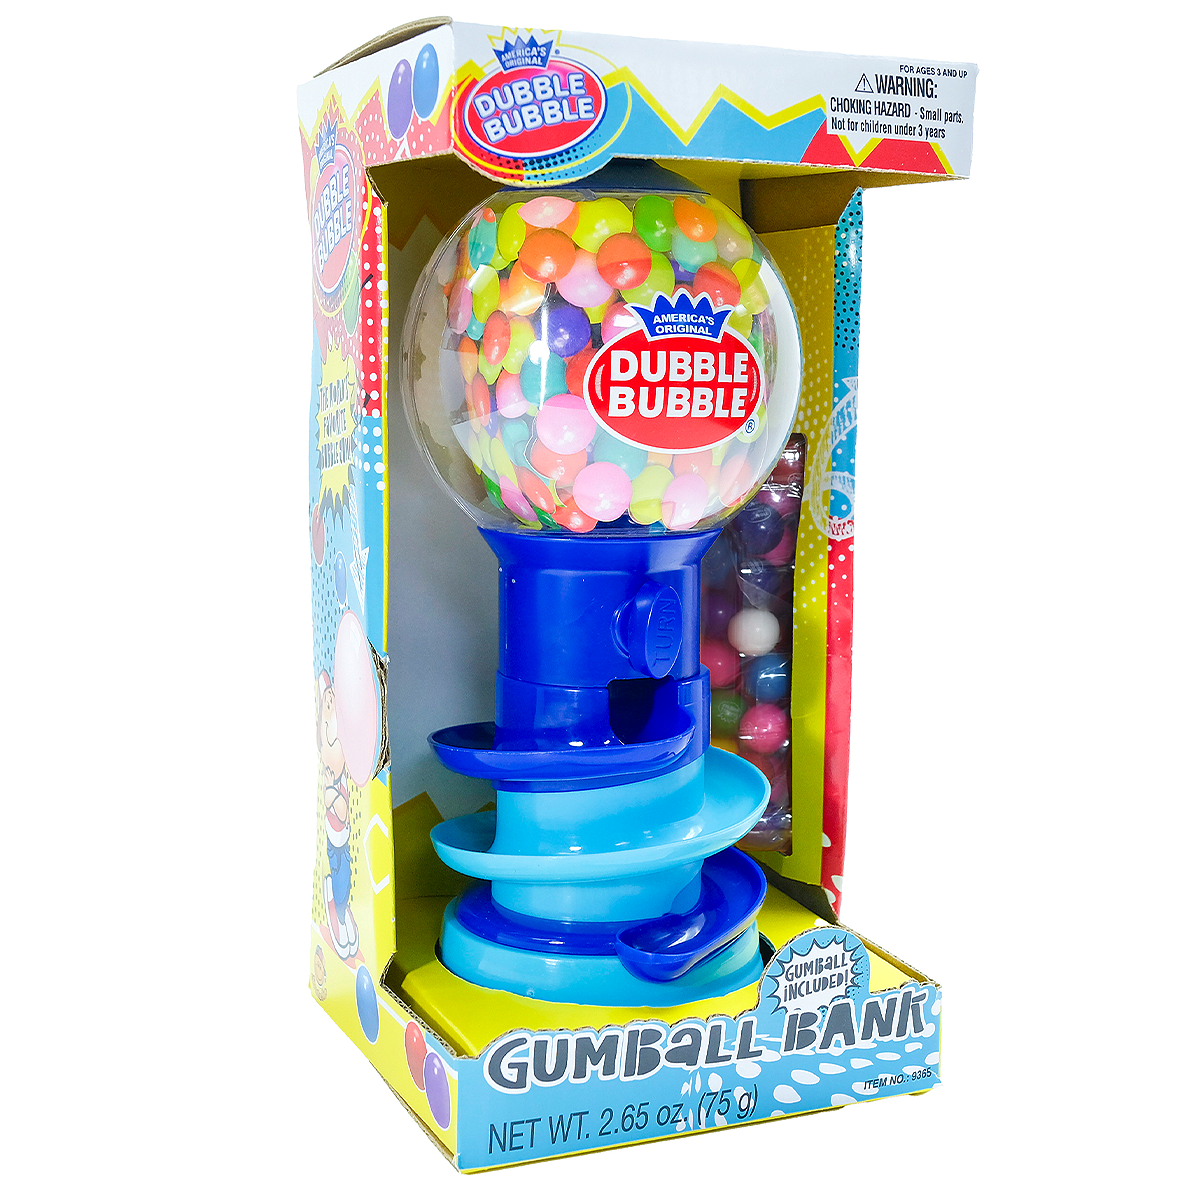 Dubble Bubble Spiral Fun Gumball Bank - 10"